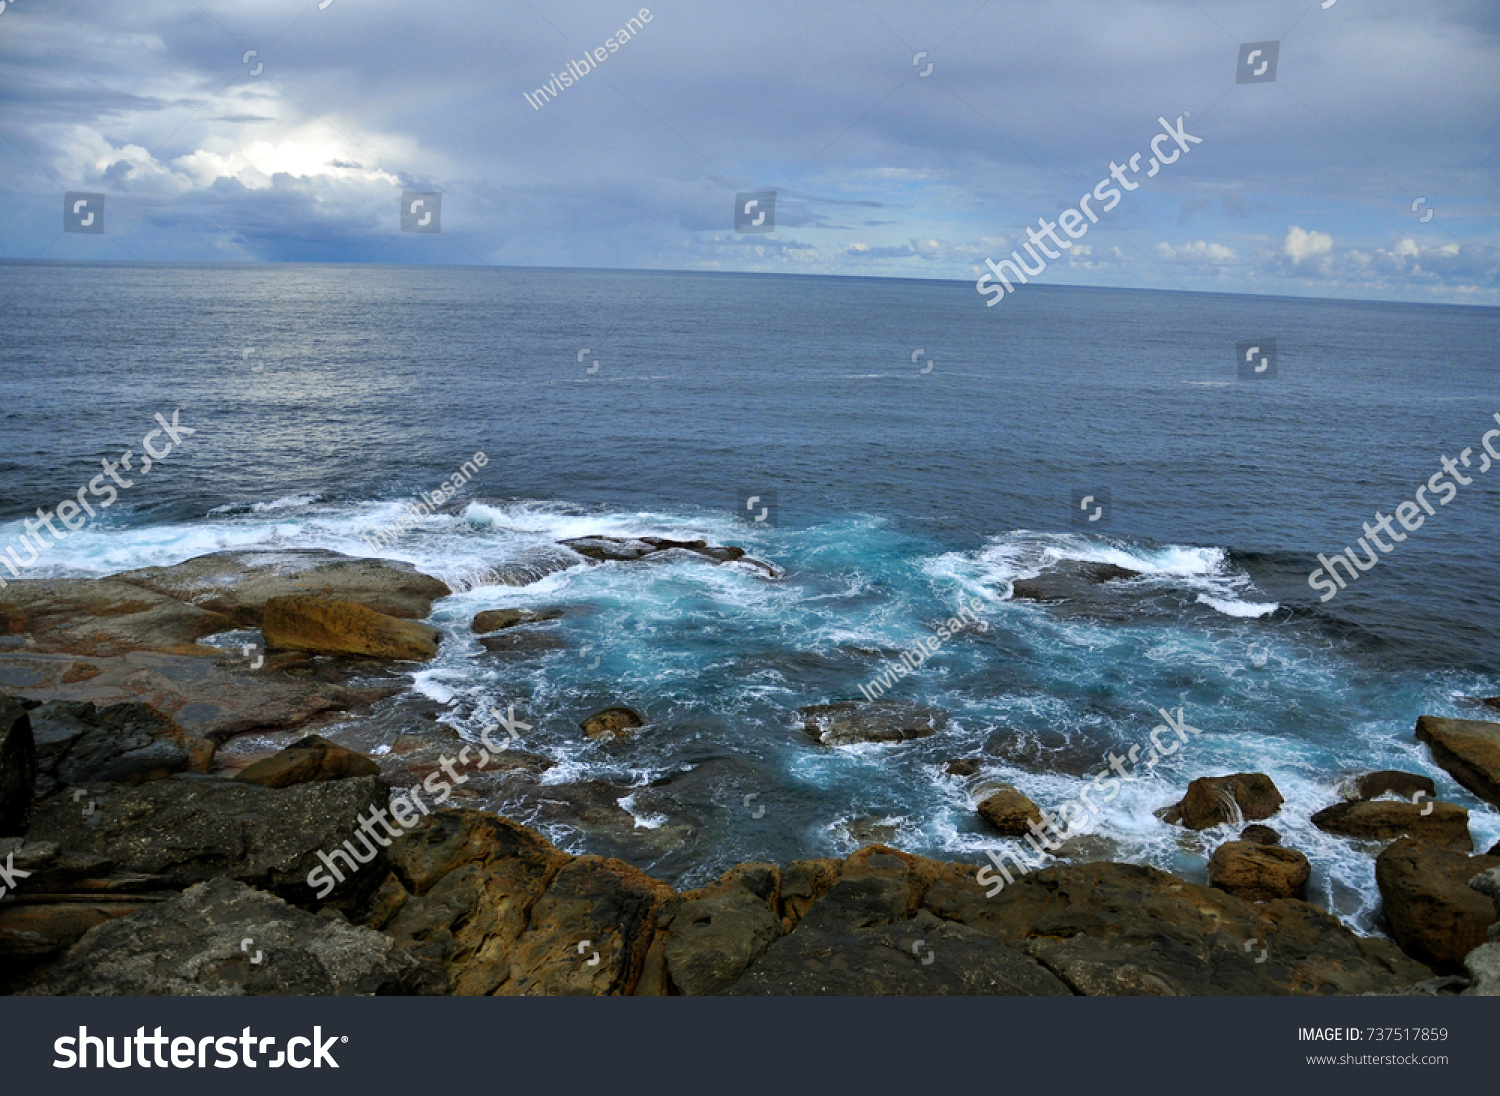 Ocean wave with rocks at Bondi Beach, Sydney, Australia #737517859